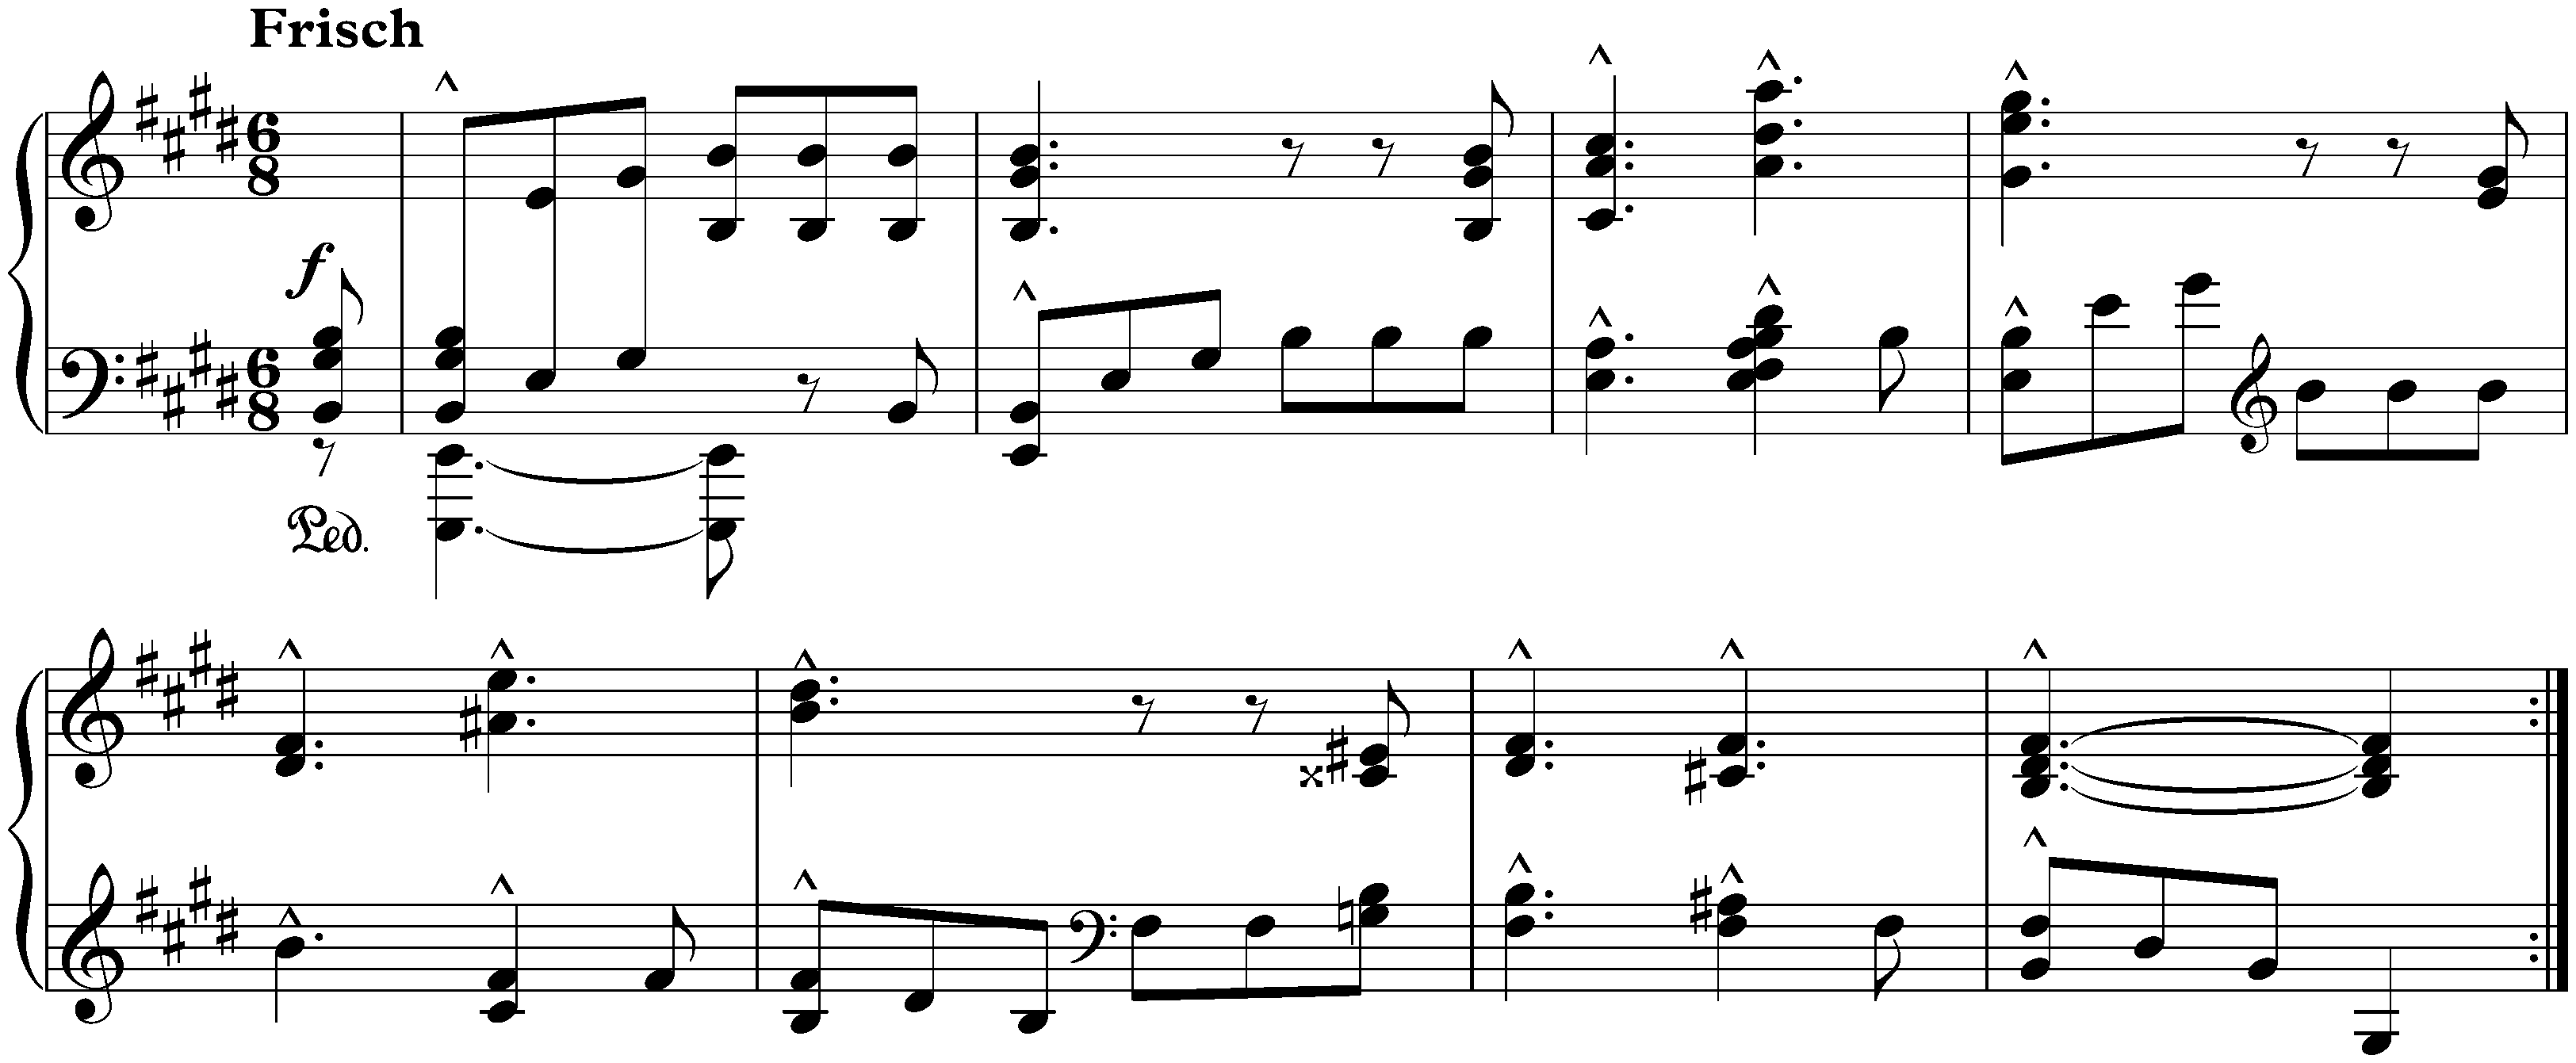 Bunte Blätter, op. 99; 3. Drei Stücklein, no. 3